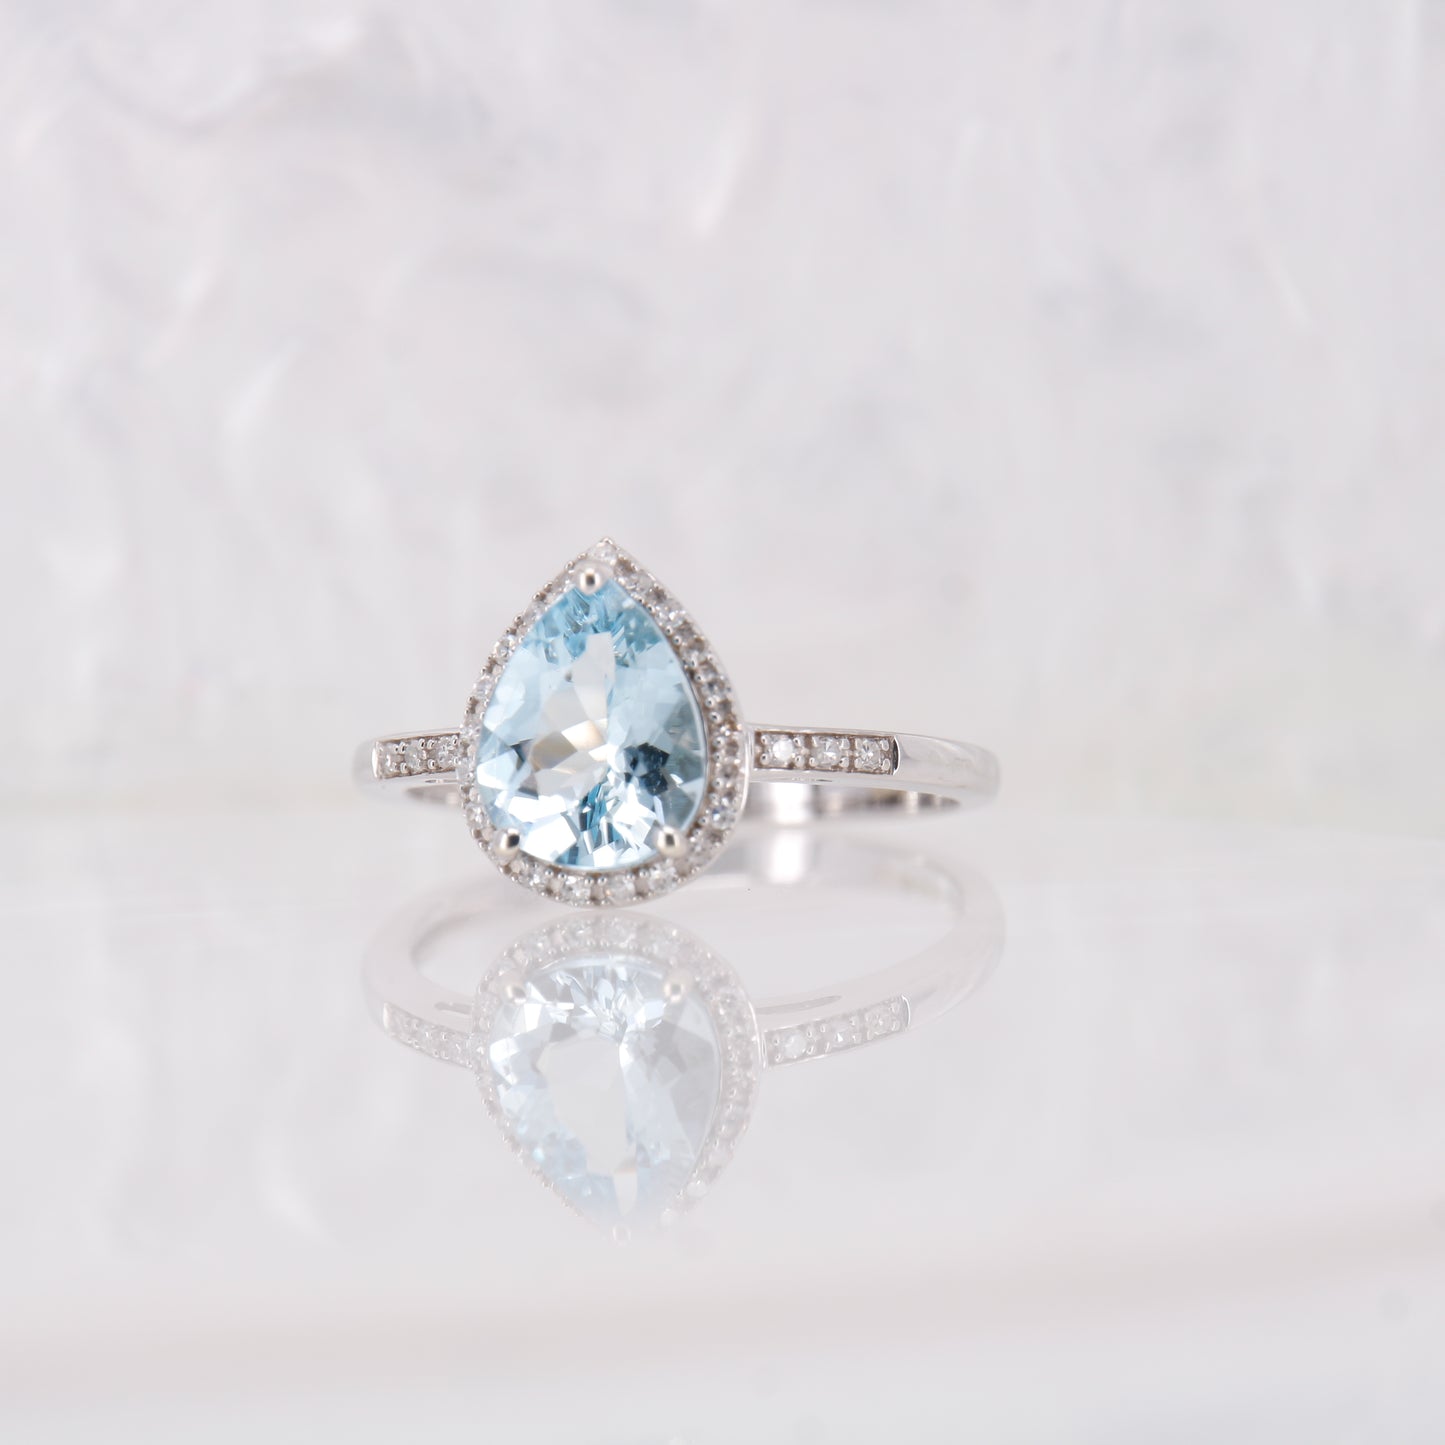 Secondhand Aquamarine and Diamond Ring 9ct White Gold, pear cut aquamarine gemstone.